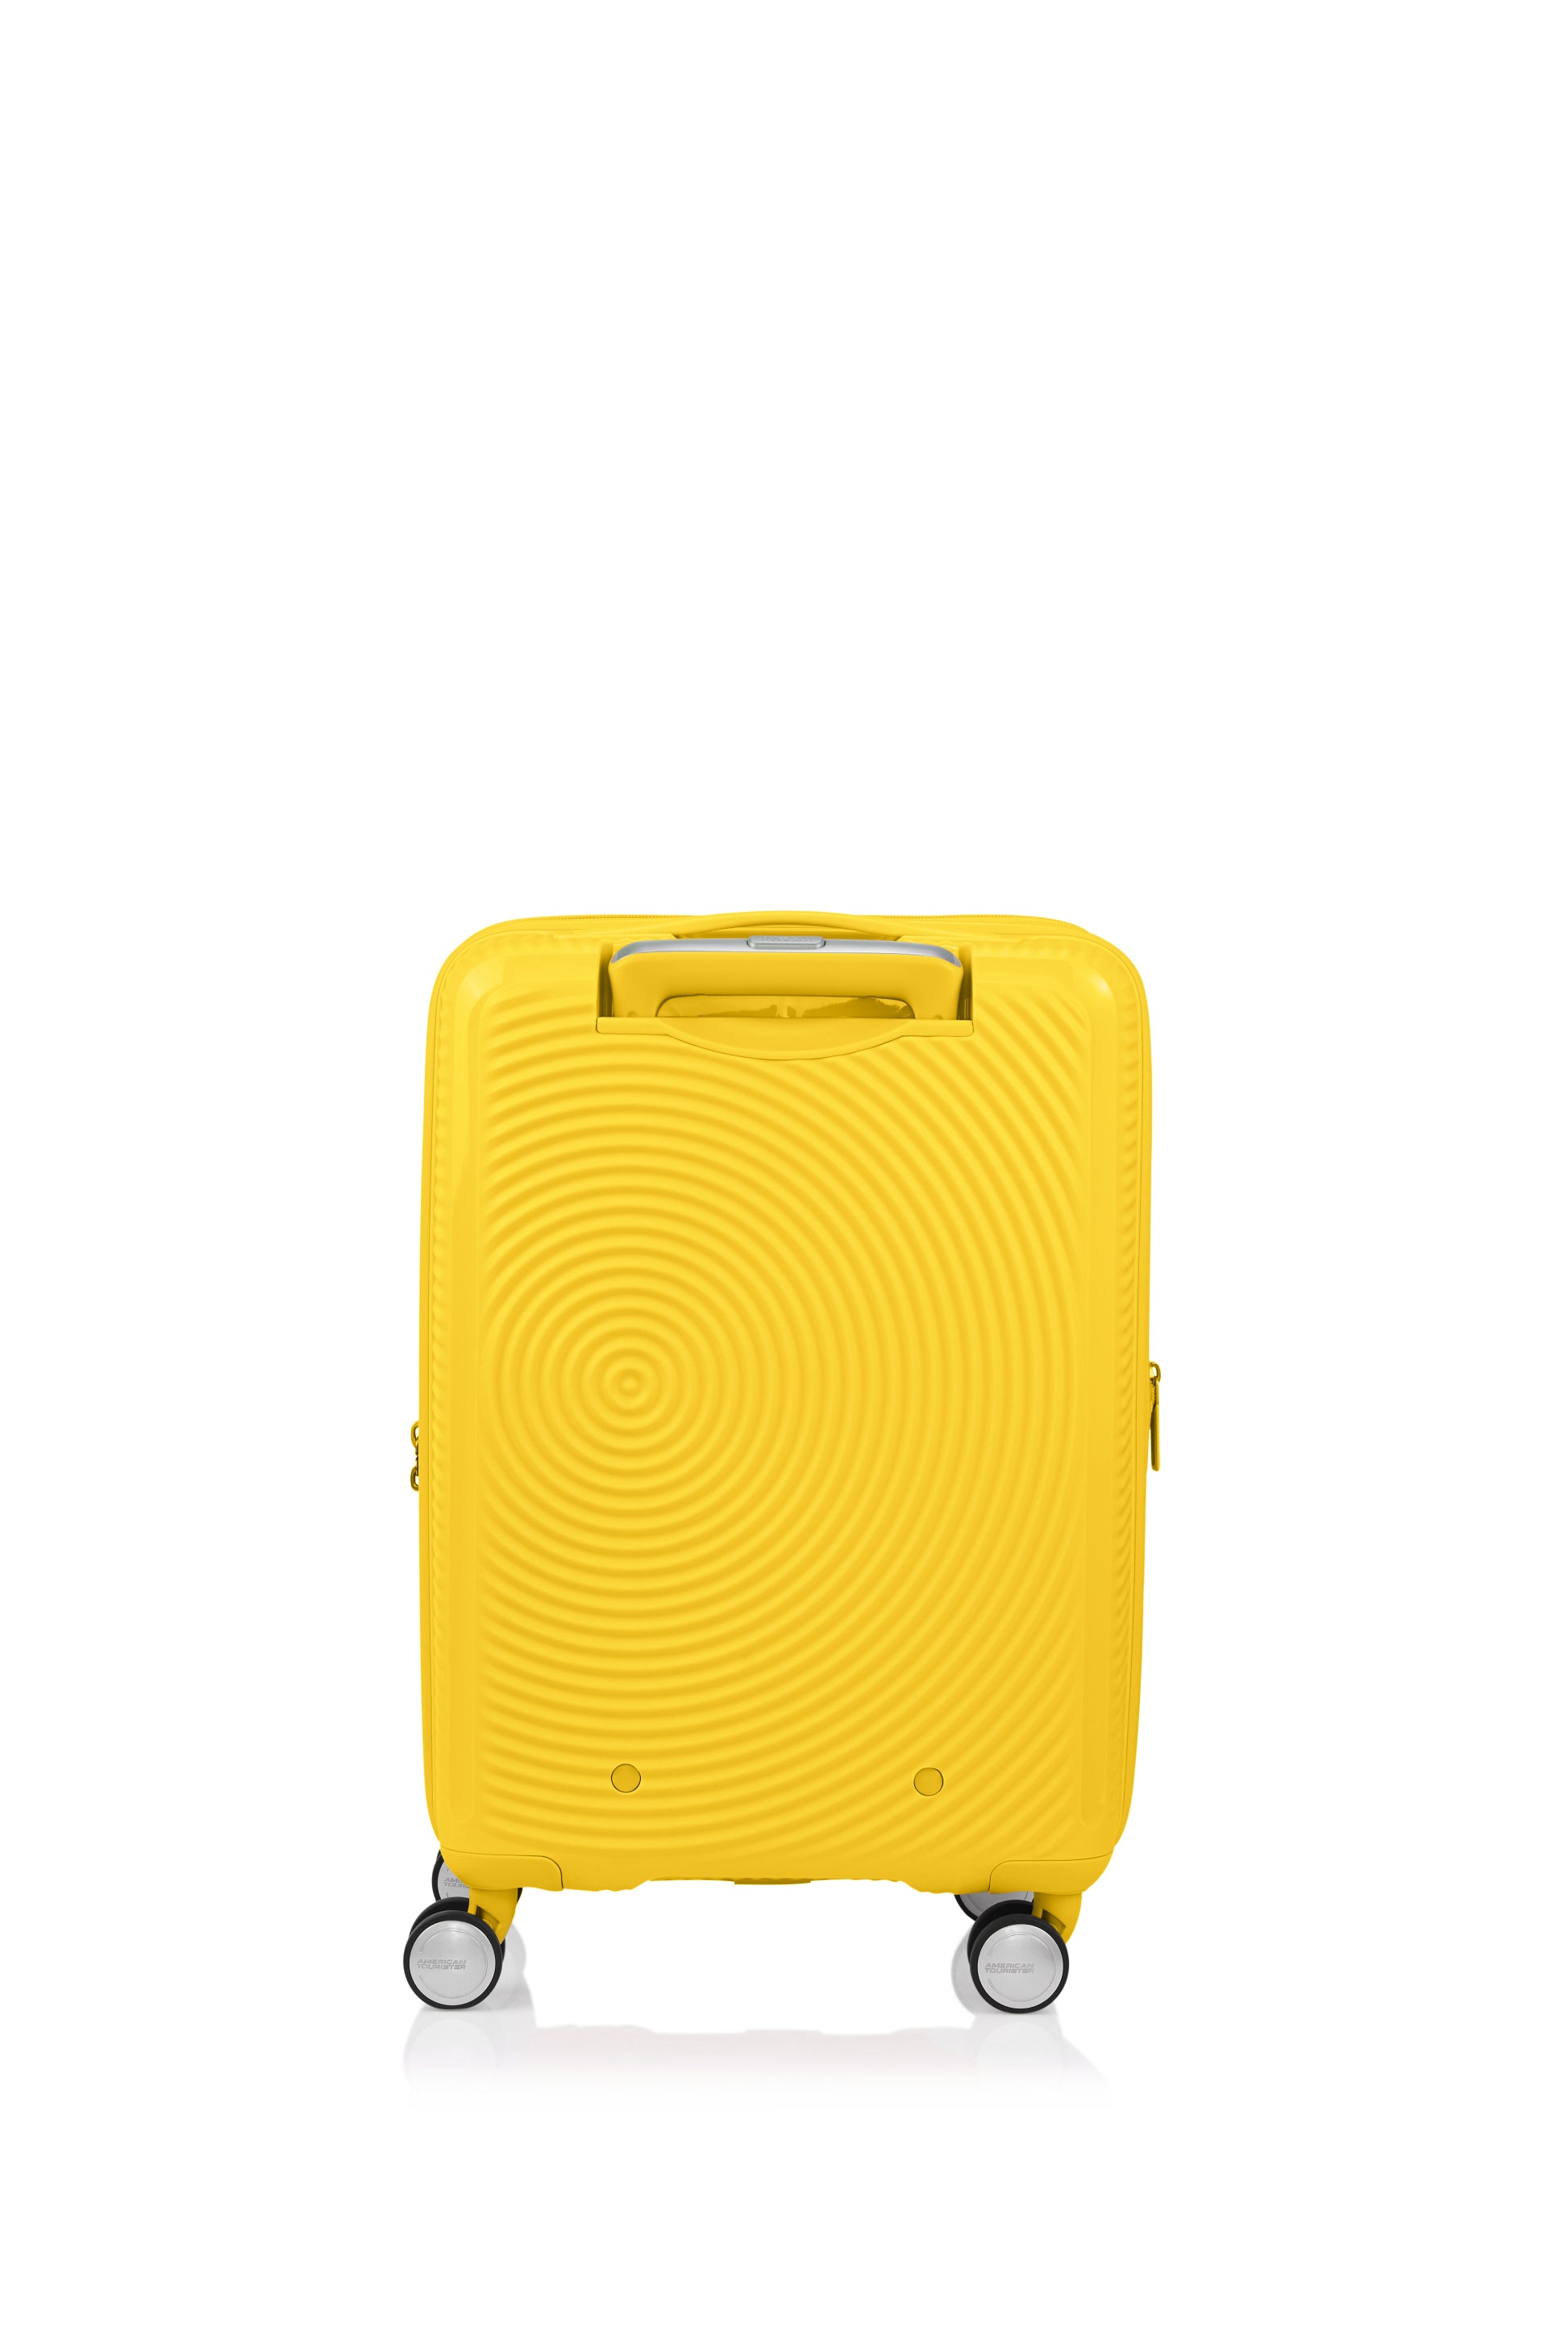 American Tourister - Curio 2.0 55cm Small Suitcase - Golden Yellow